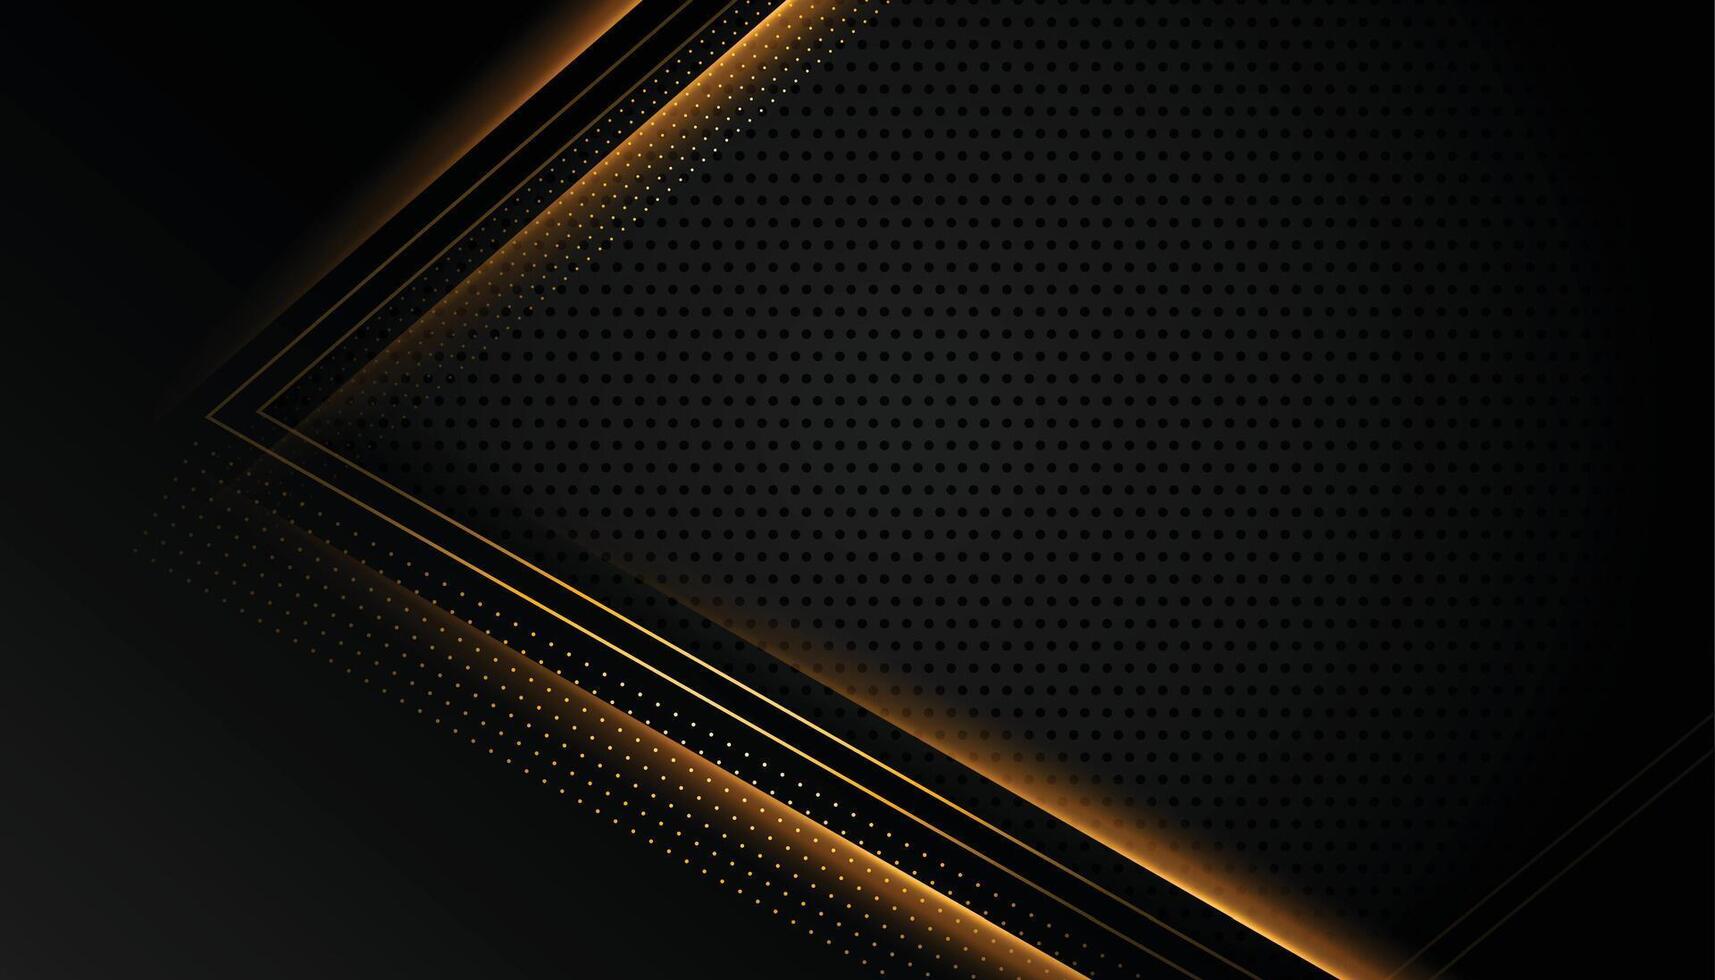 blacj dark background with shiny golden light lines vector